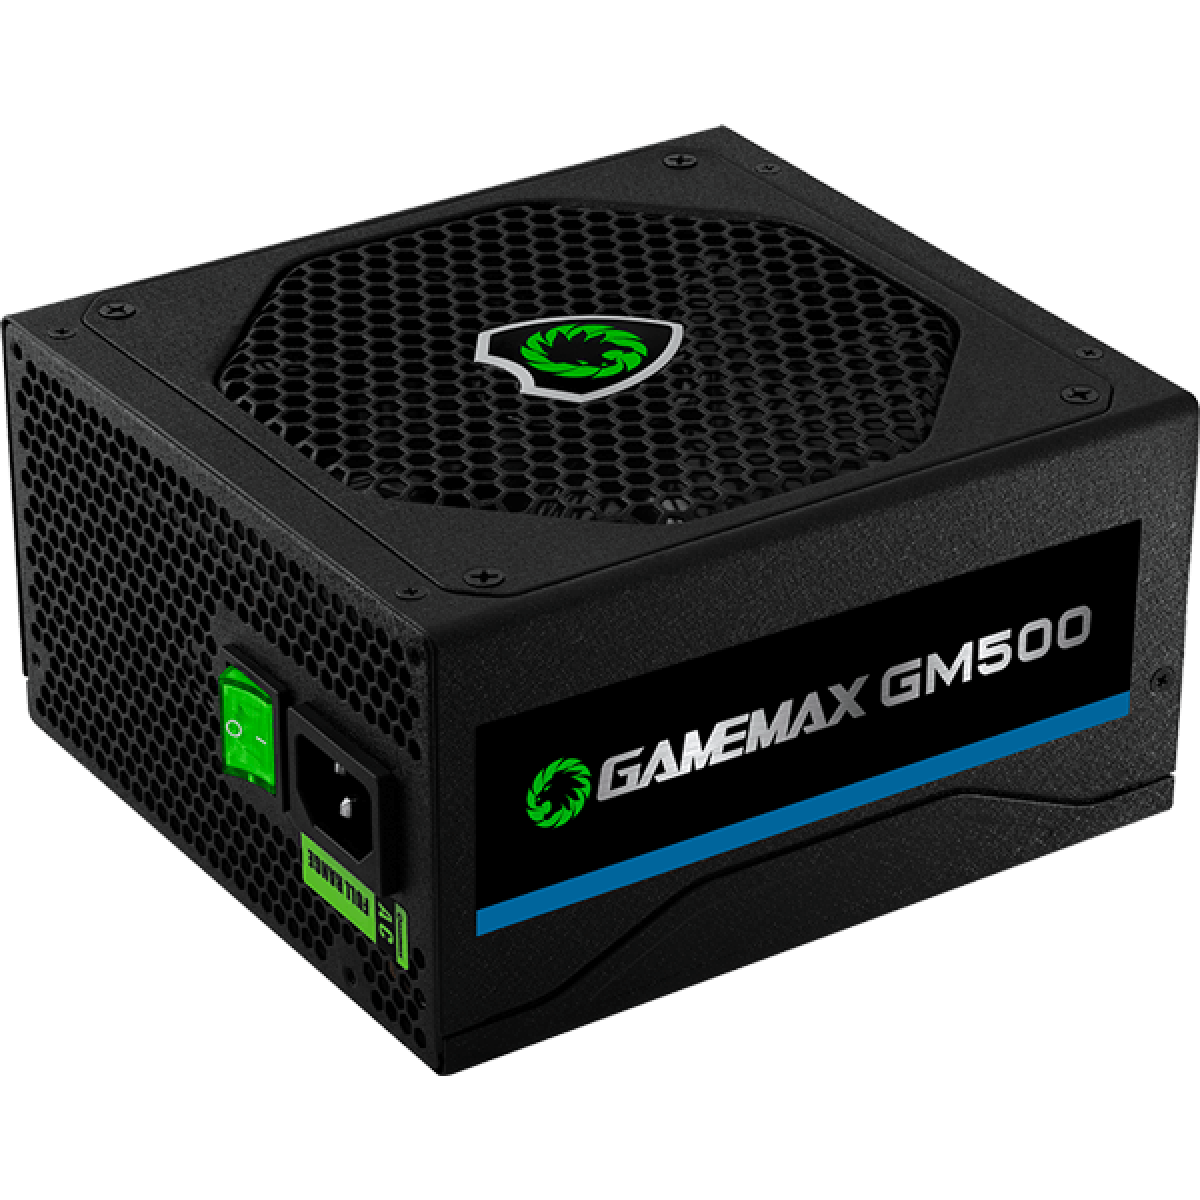 Fonte Gamemax GM500 suporta R5 2400G e RX 570? - Fontes e energia - Clube  do Hardware